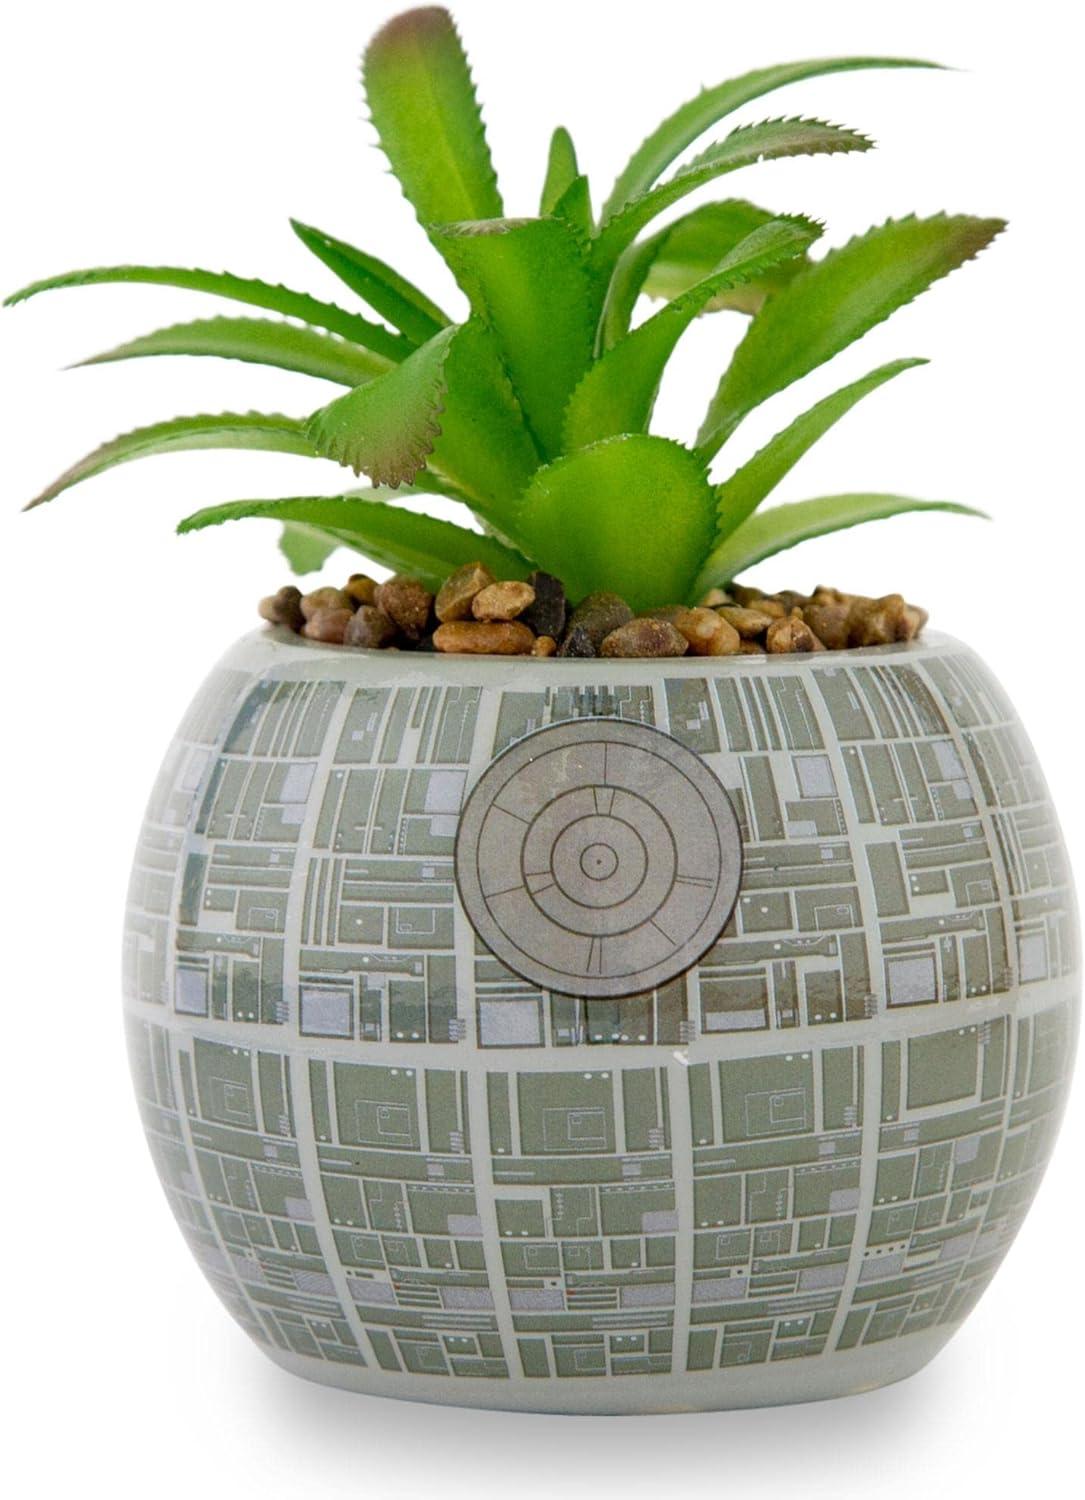 Galactic Mini Ceramic Death Star Planter with Lifelike Succulent